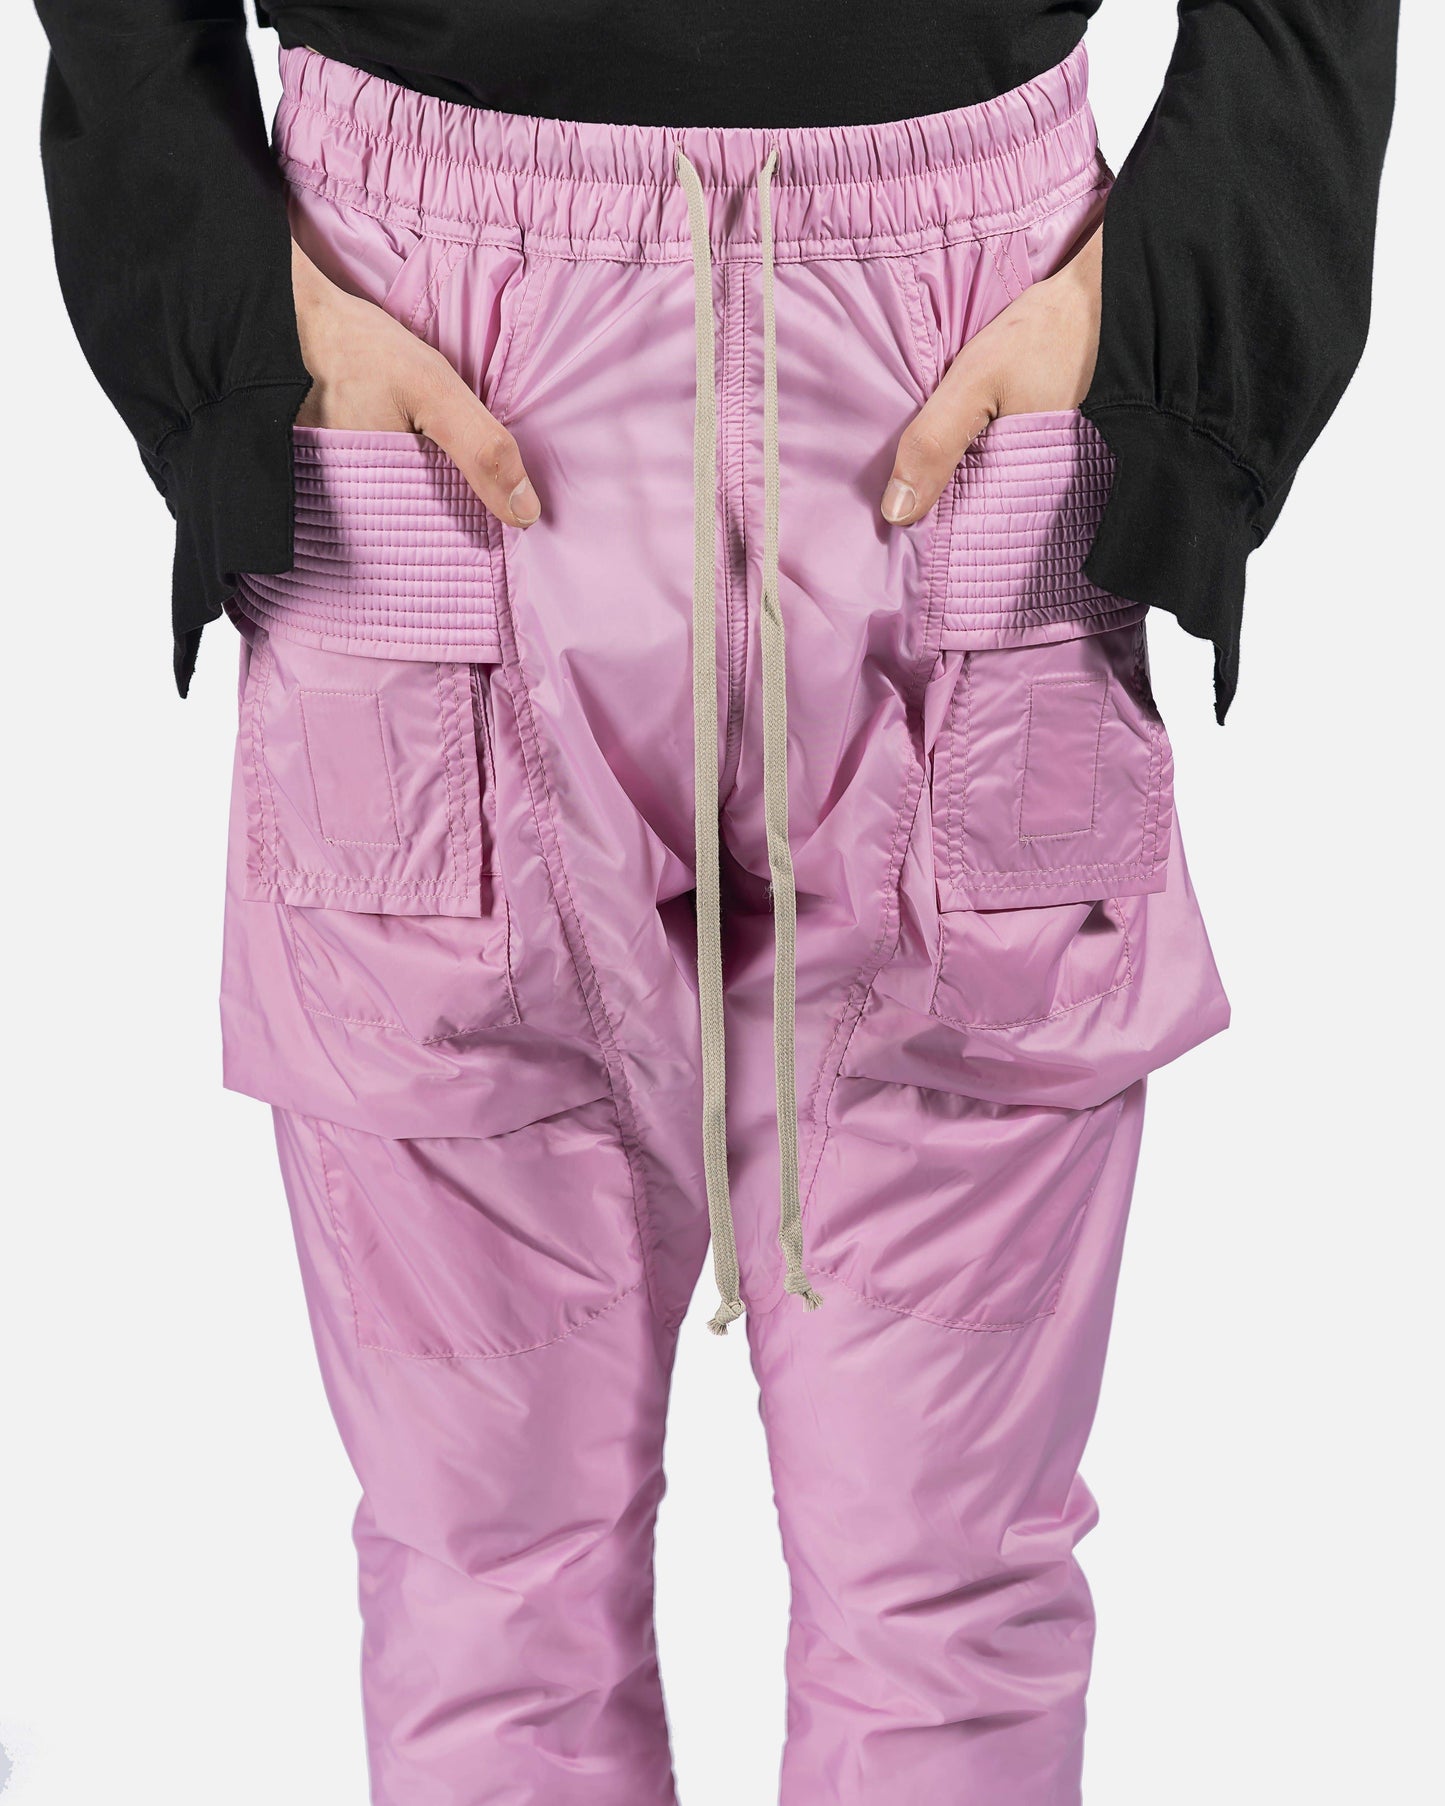 Rick Owens DRKSHDW Men's Pants Creatch Cargo Drawstring in Dirty Pink